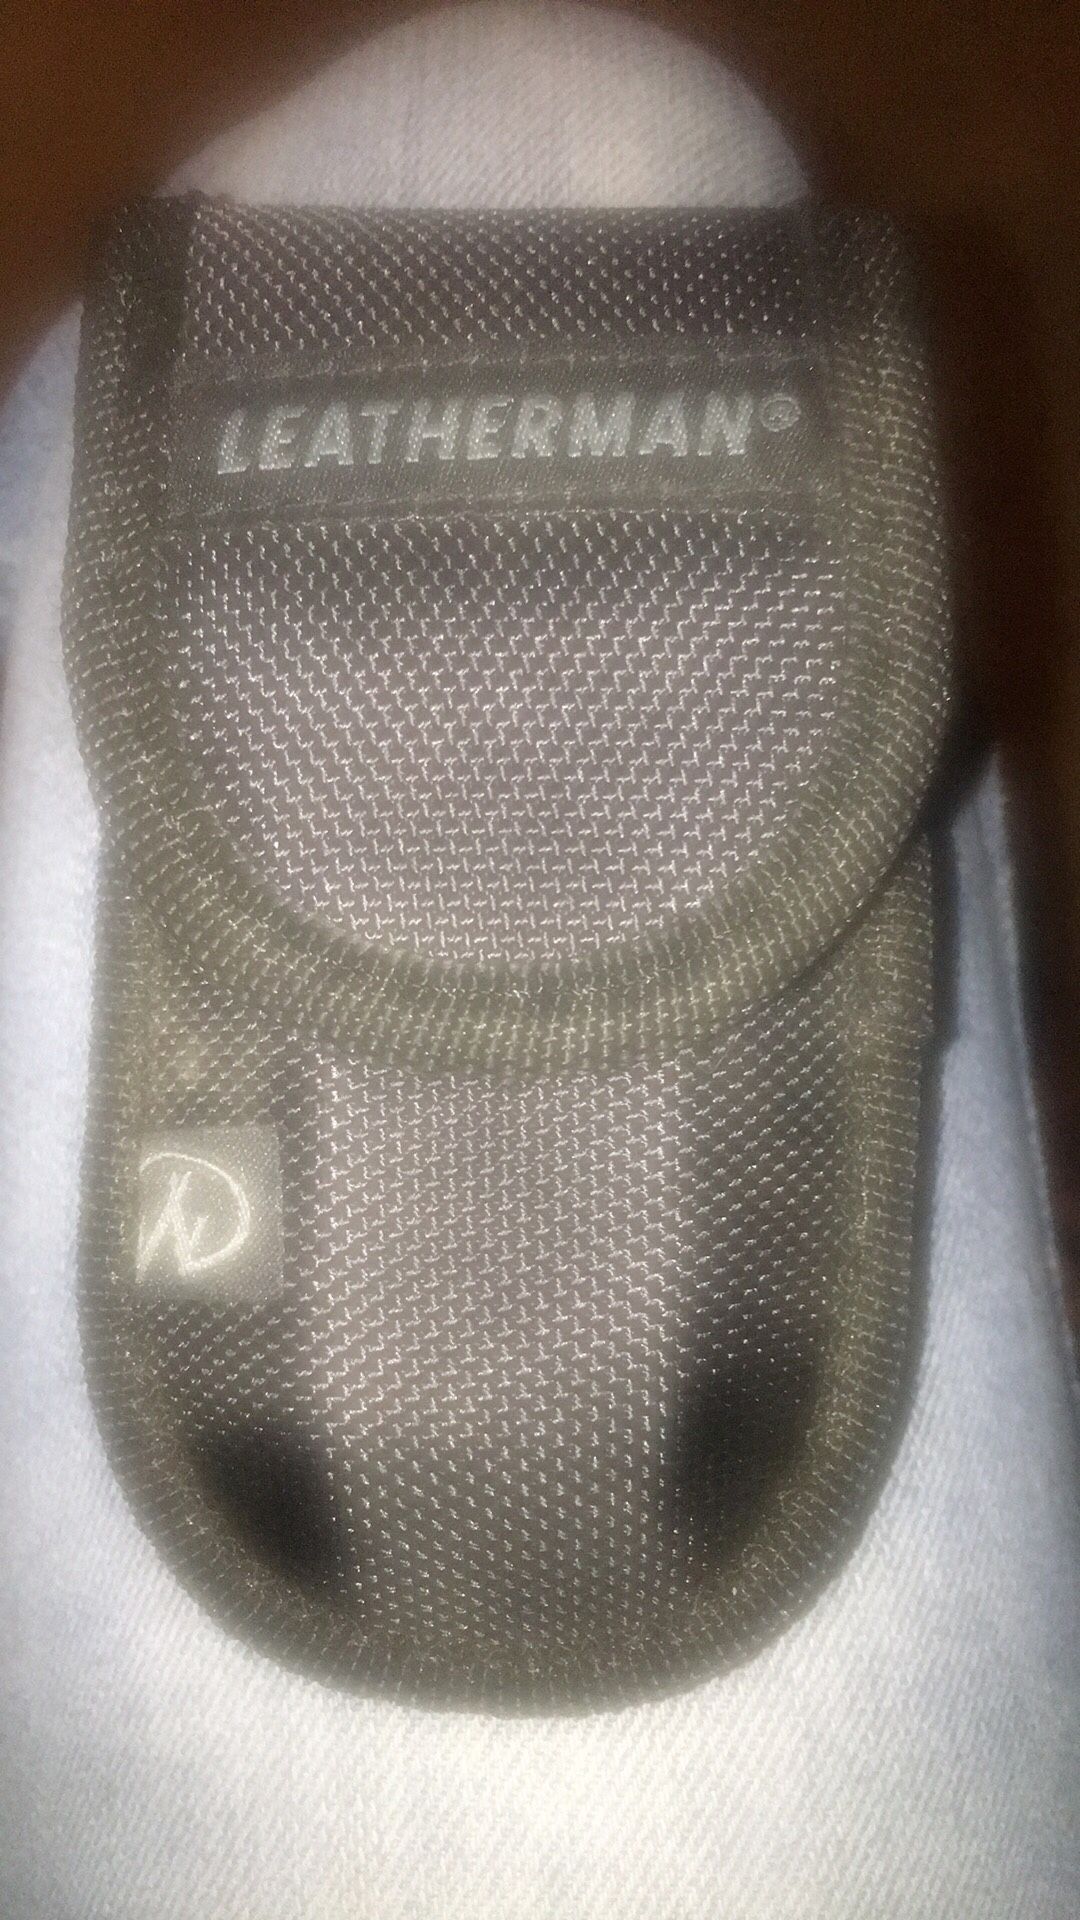 Leather man